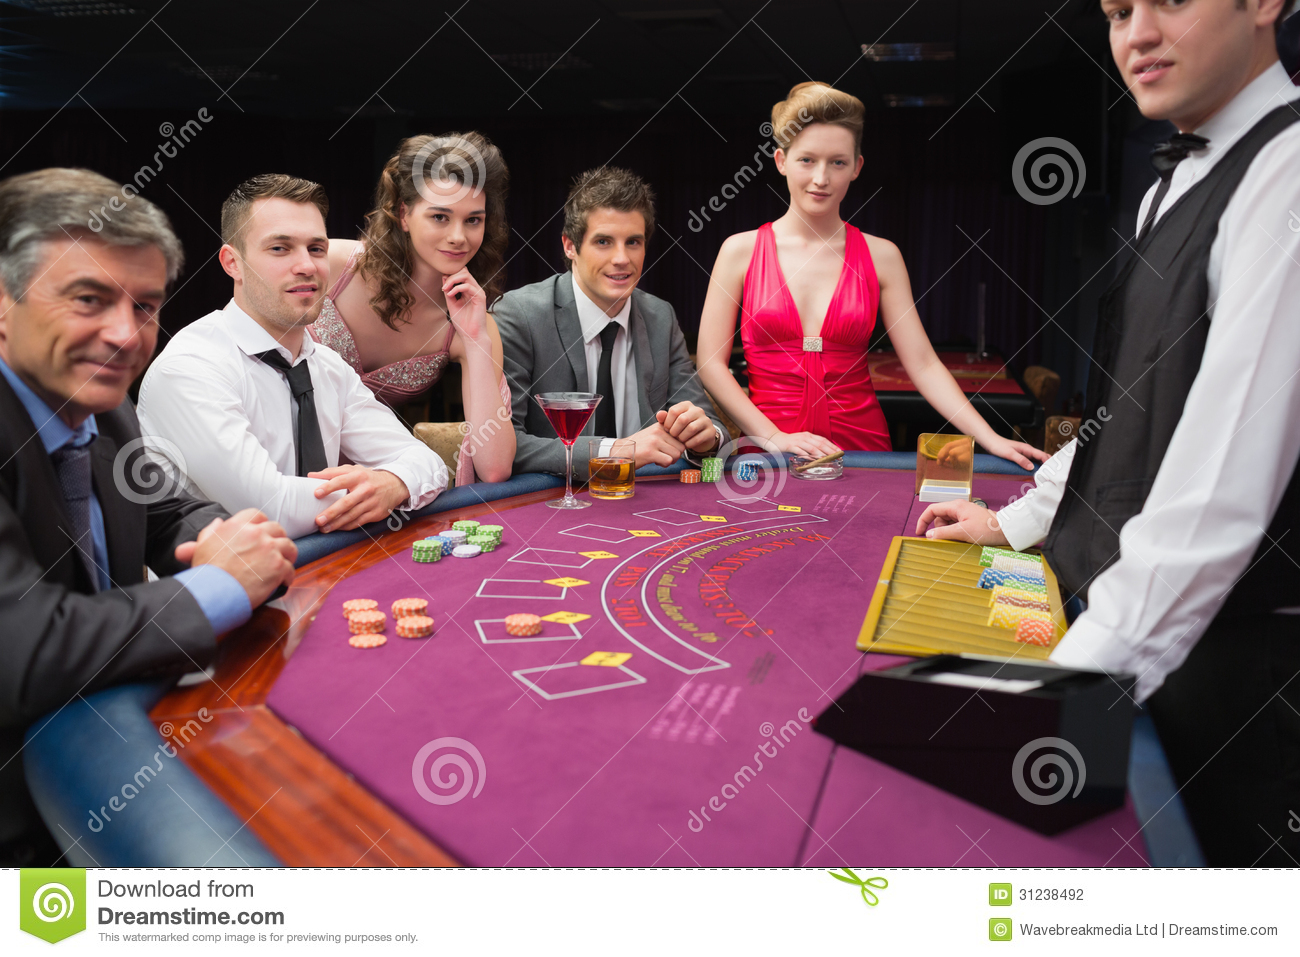 doubleu casino mod apk download